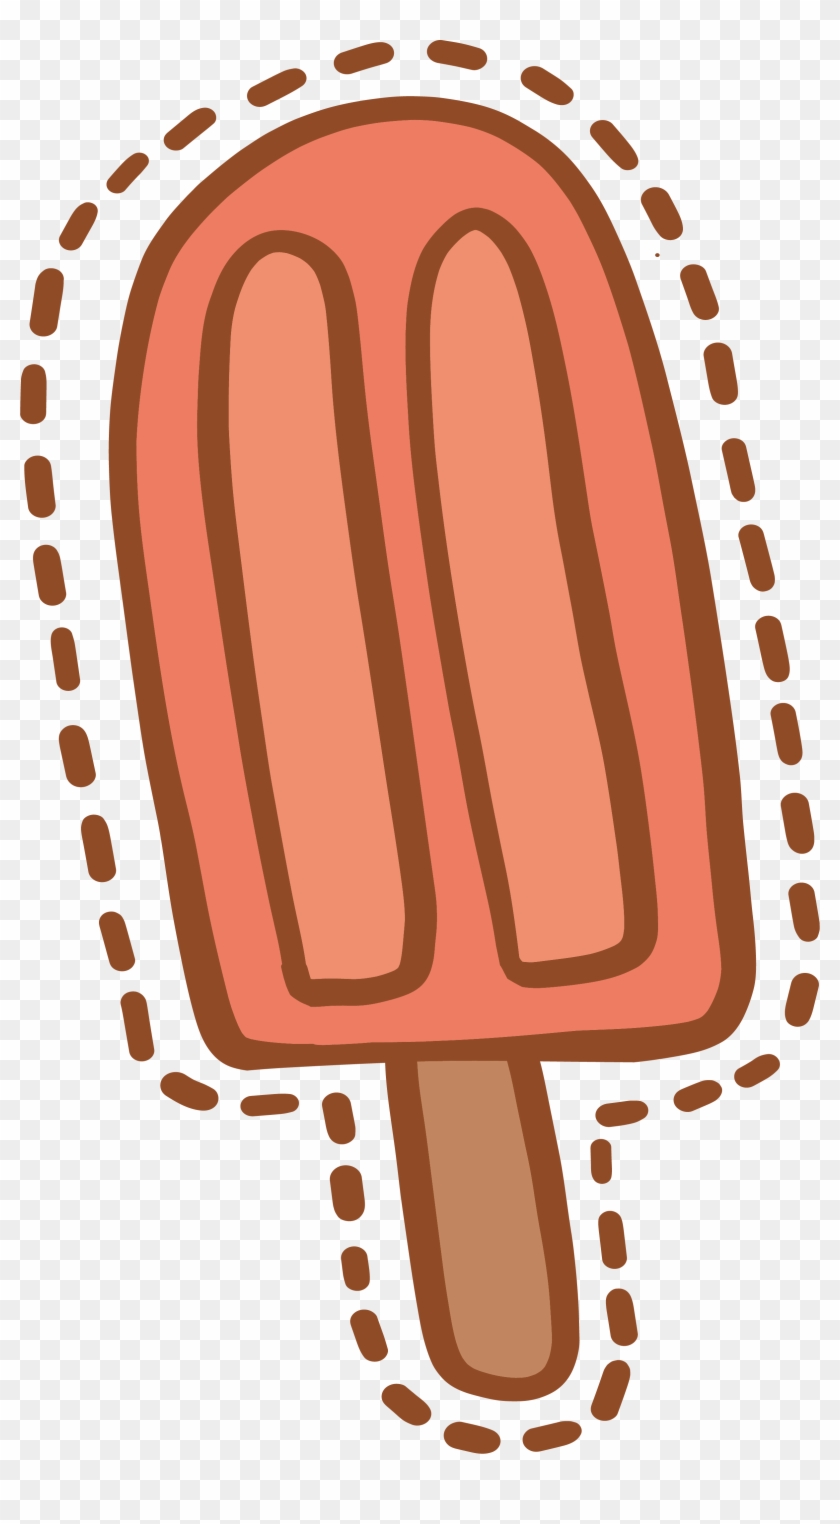 Ice Cream Ice Pop Illustration - Ice Cream Ice Pop Illustration #474221